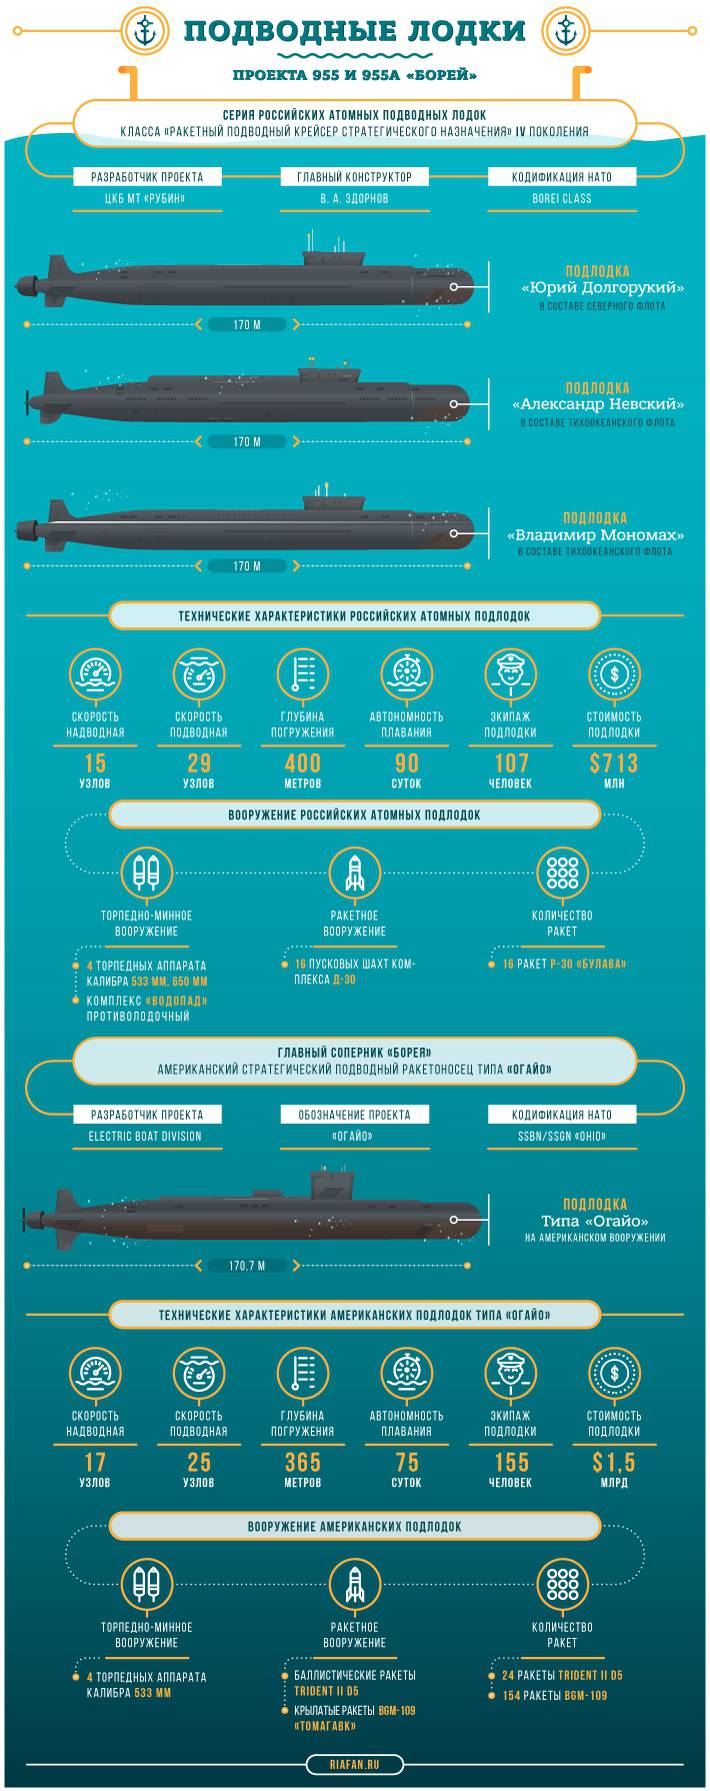 Подводная лодка типа "борей" - borei-class submarine - abcdef.wiki